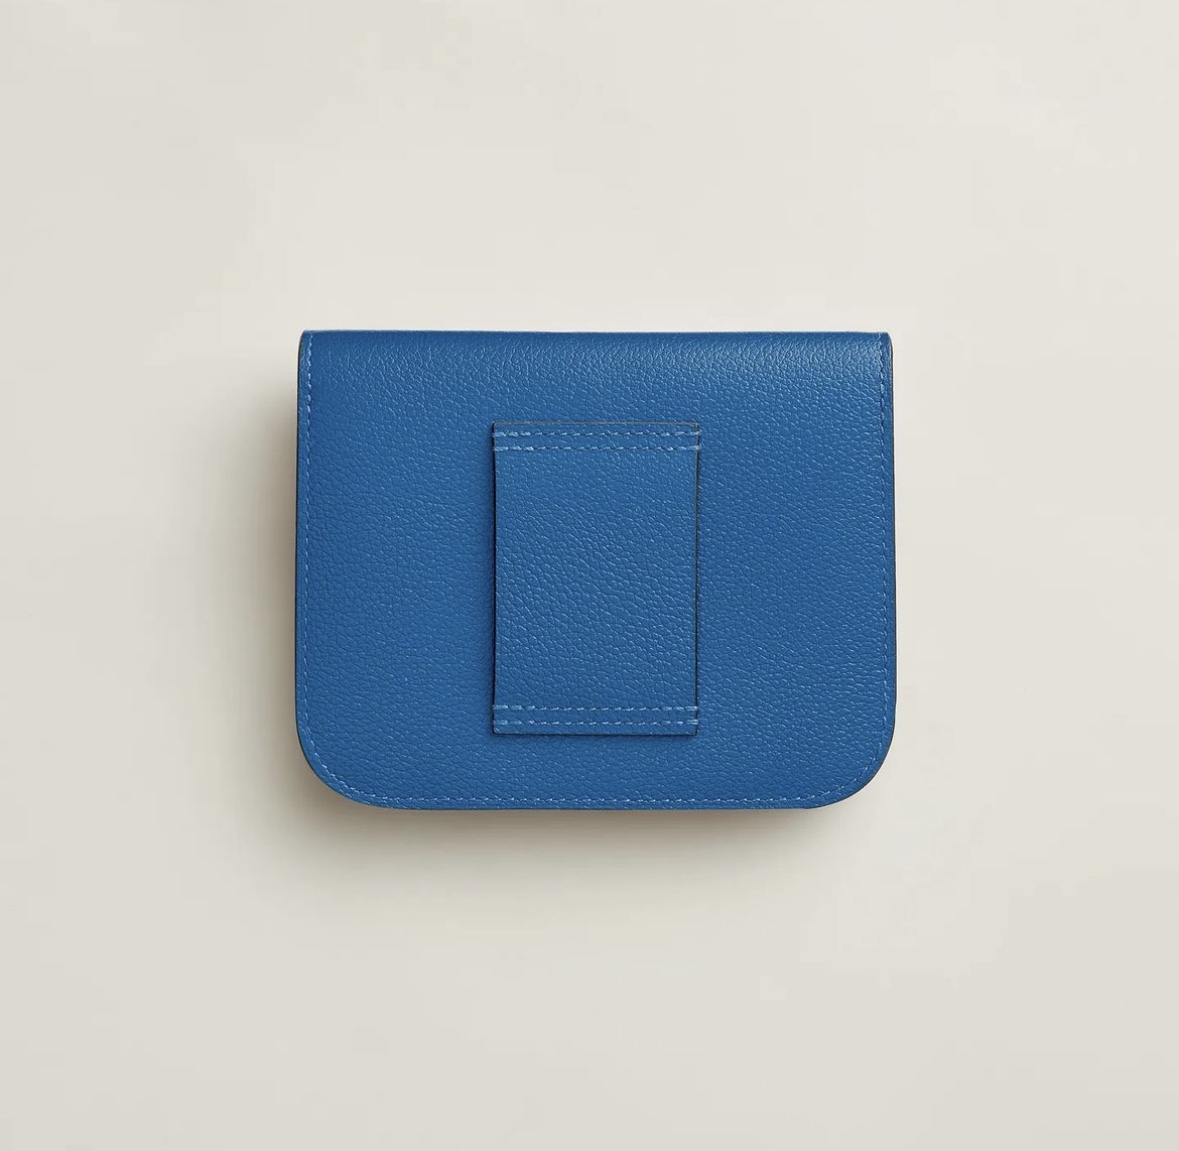 Hermès Constance Slim wallet CK71 Bleu de France Evercolor